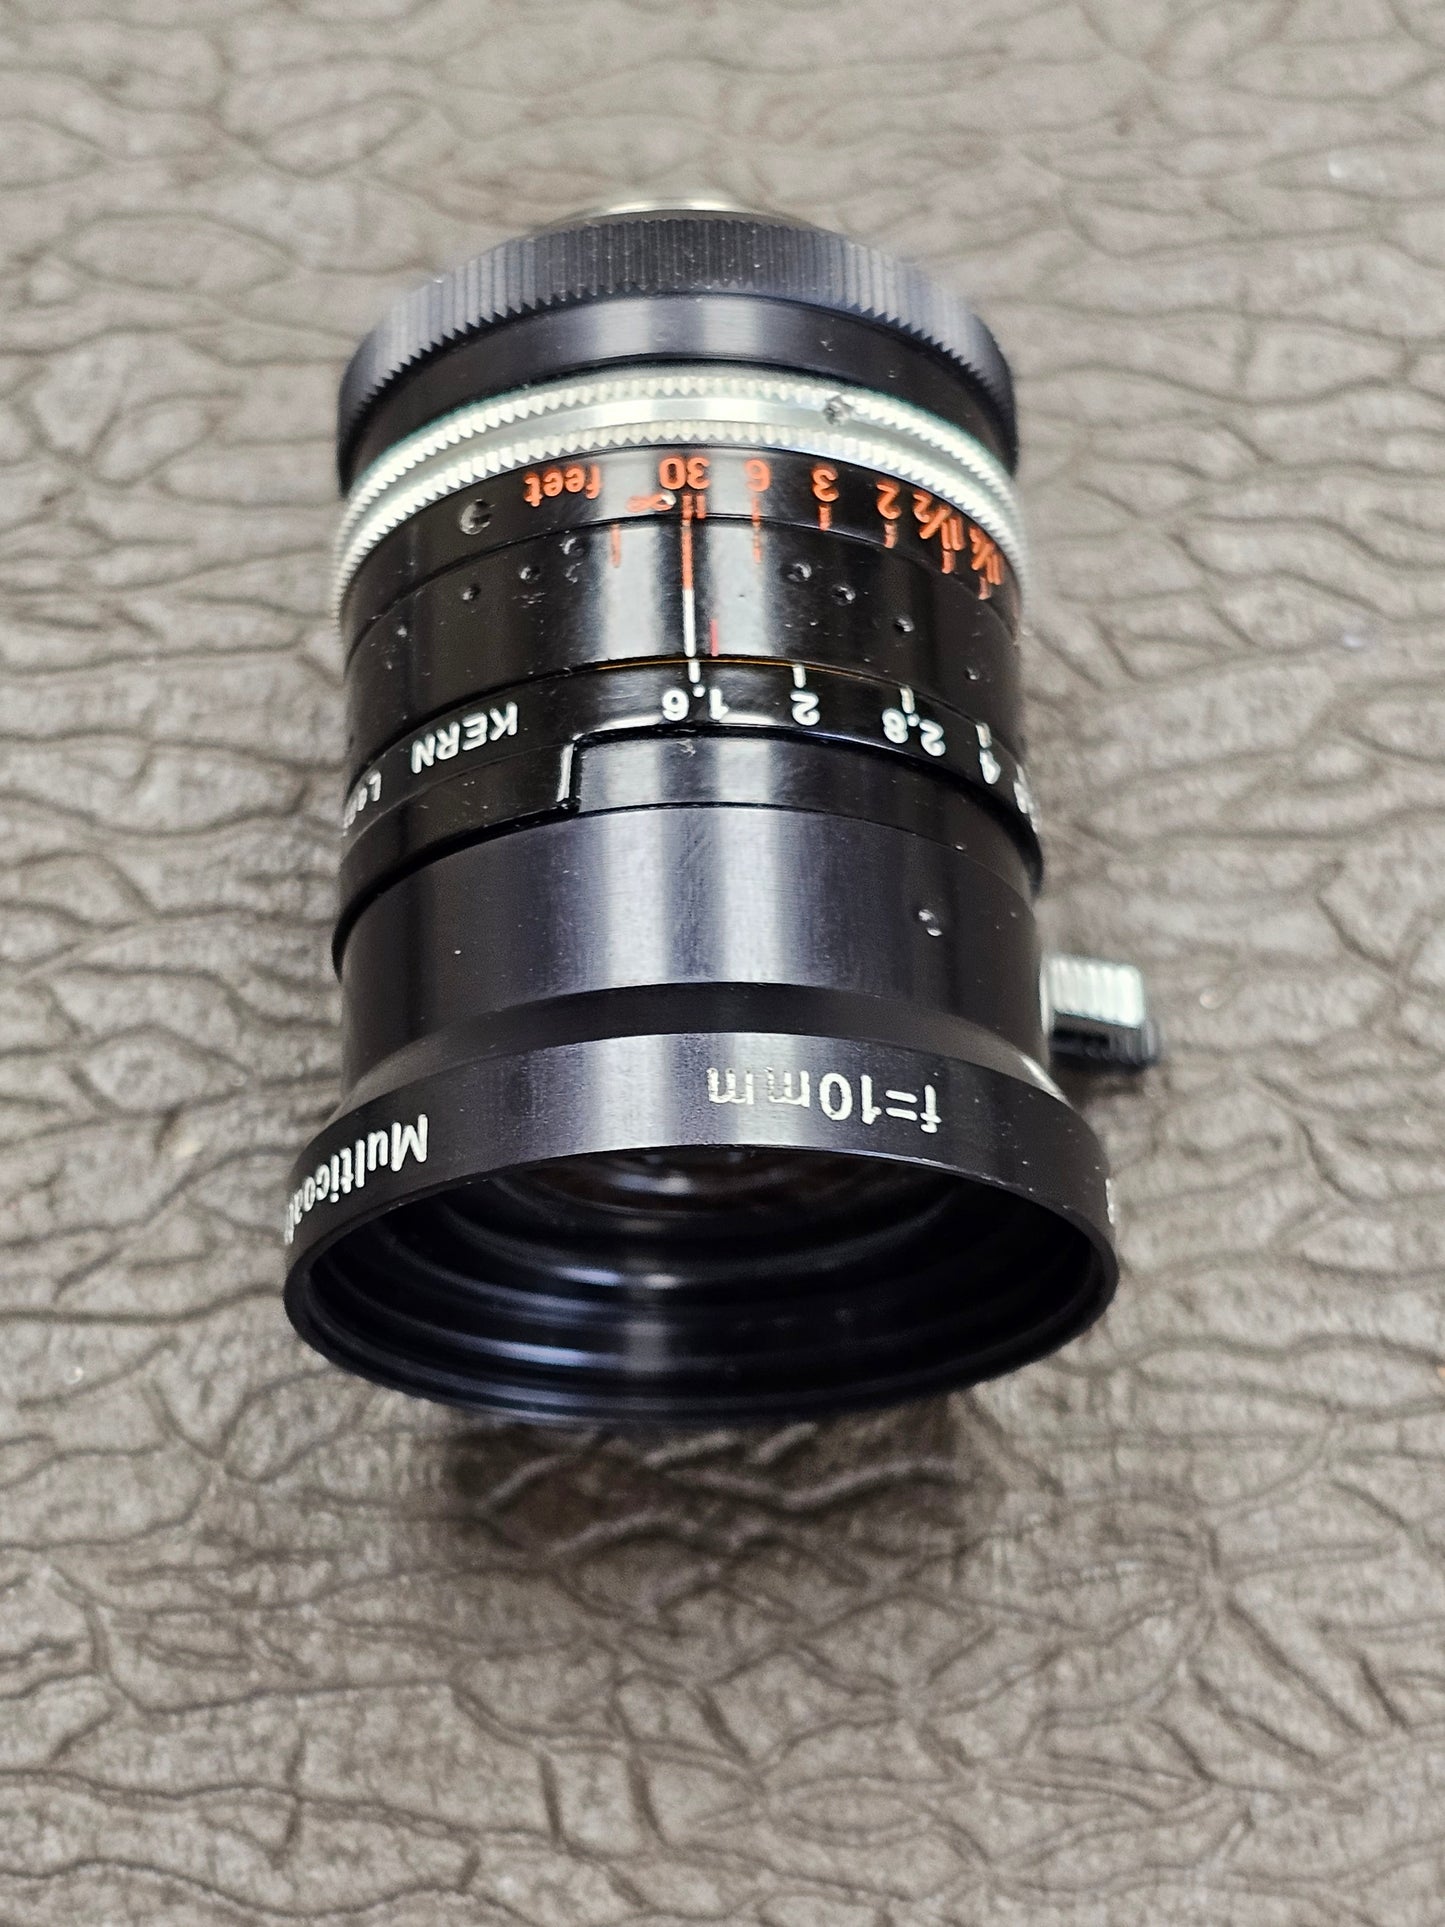 Switar 10mm f/1.6 Multicoated C-Mount ( Black Version) S# 1145731